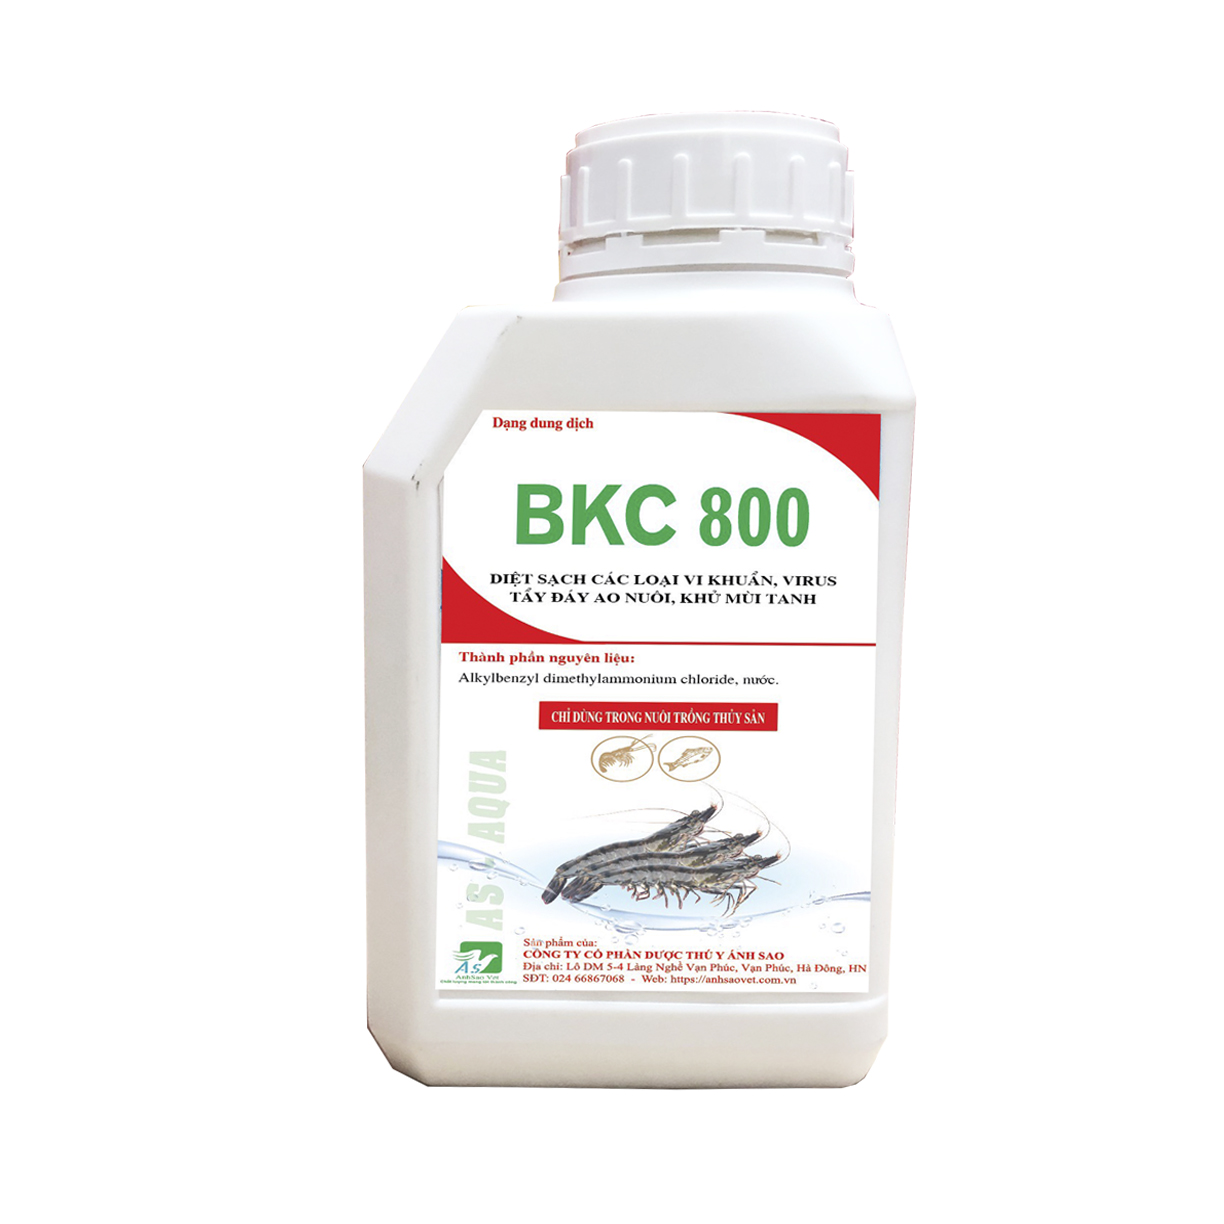 BKC 800